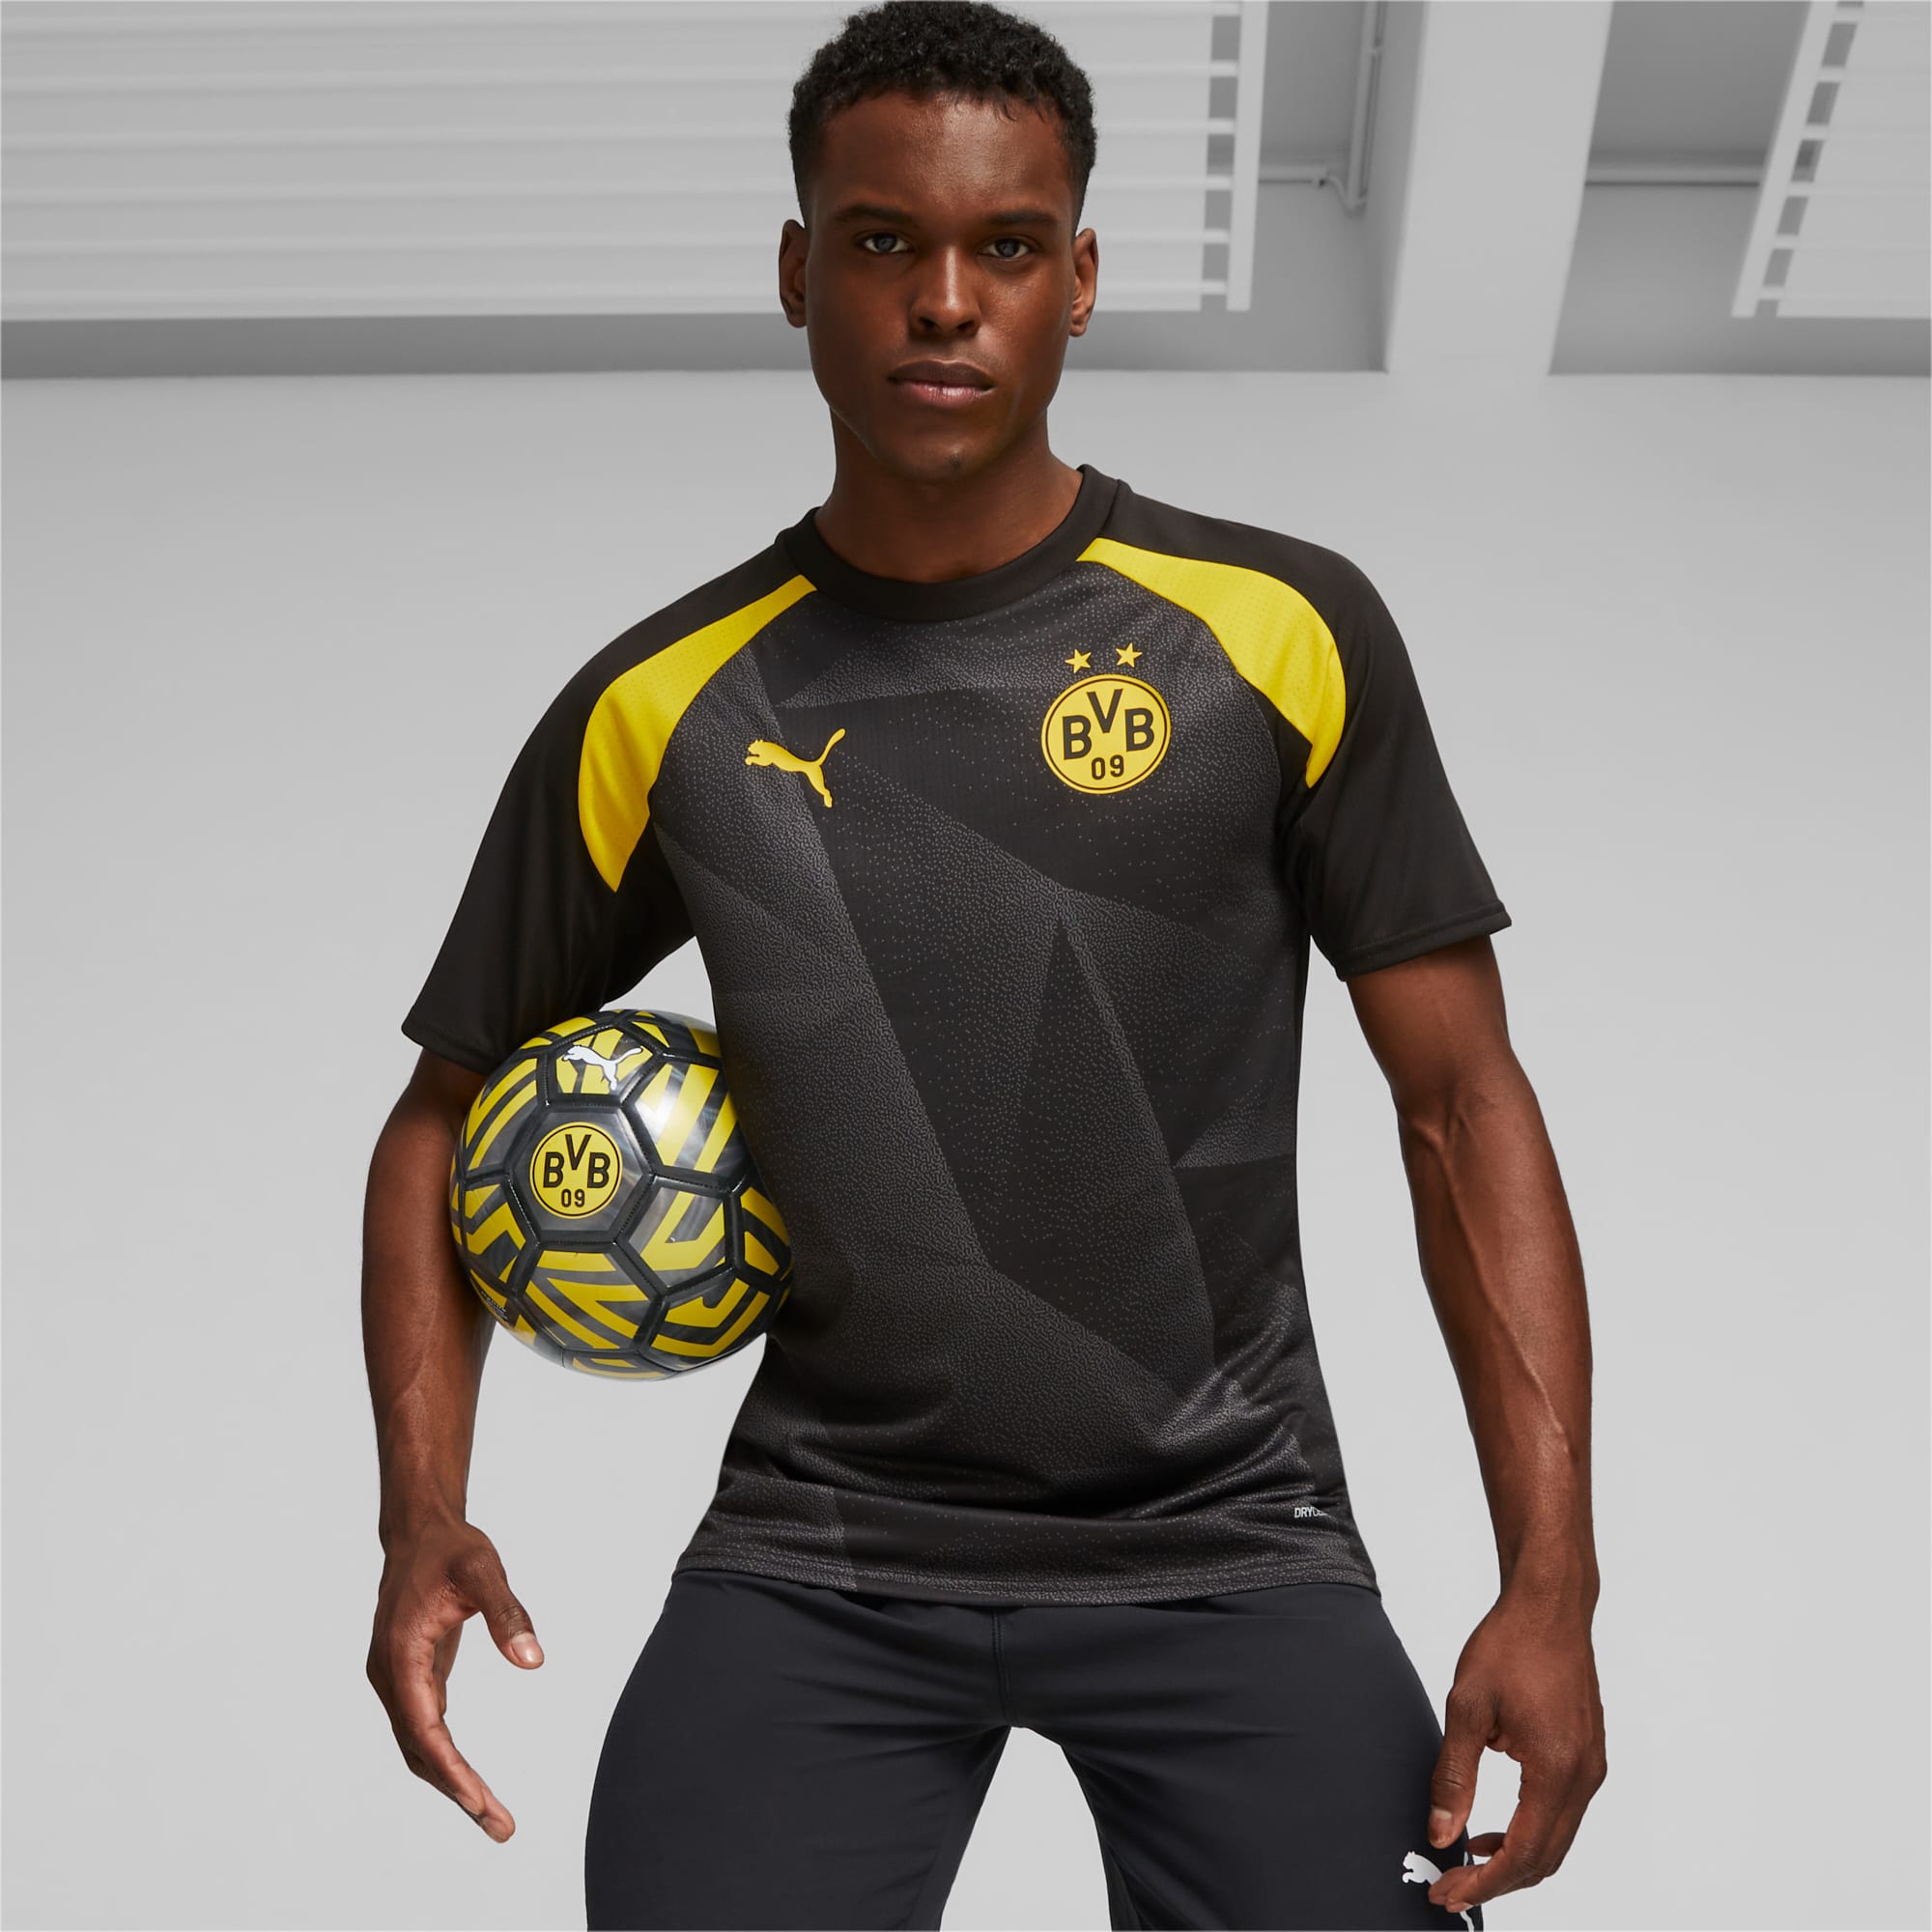 Camiseta deportiva Borussia Dortmund prepartido de manga corta para hombre, yellow